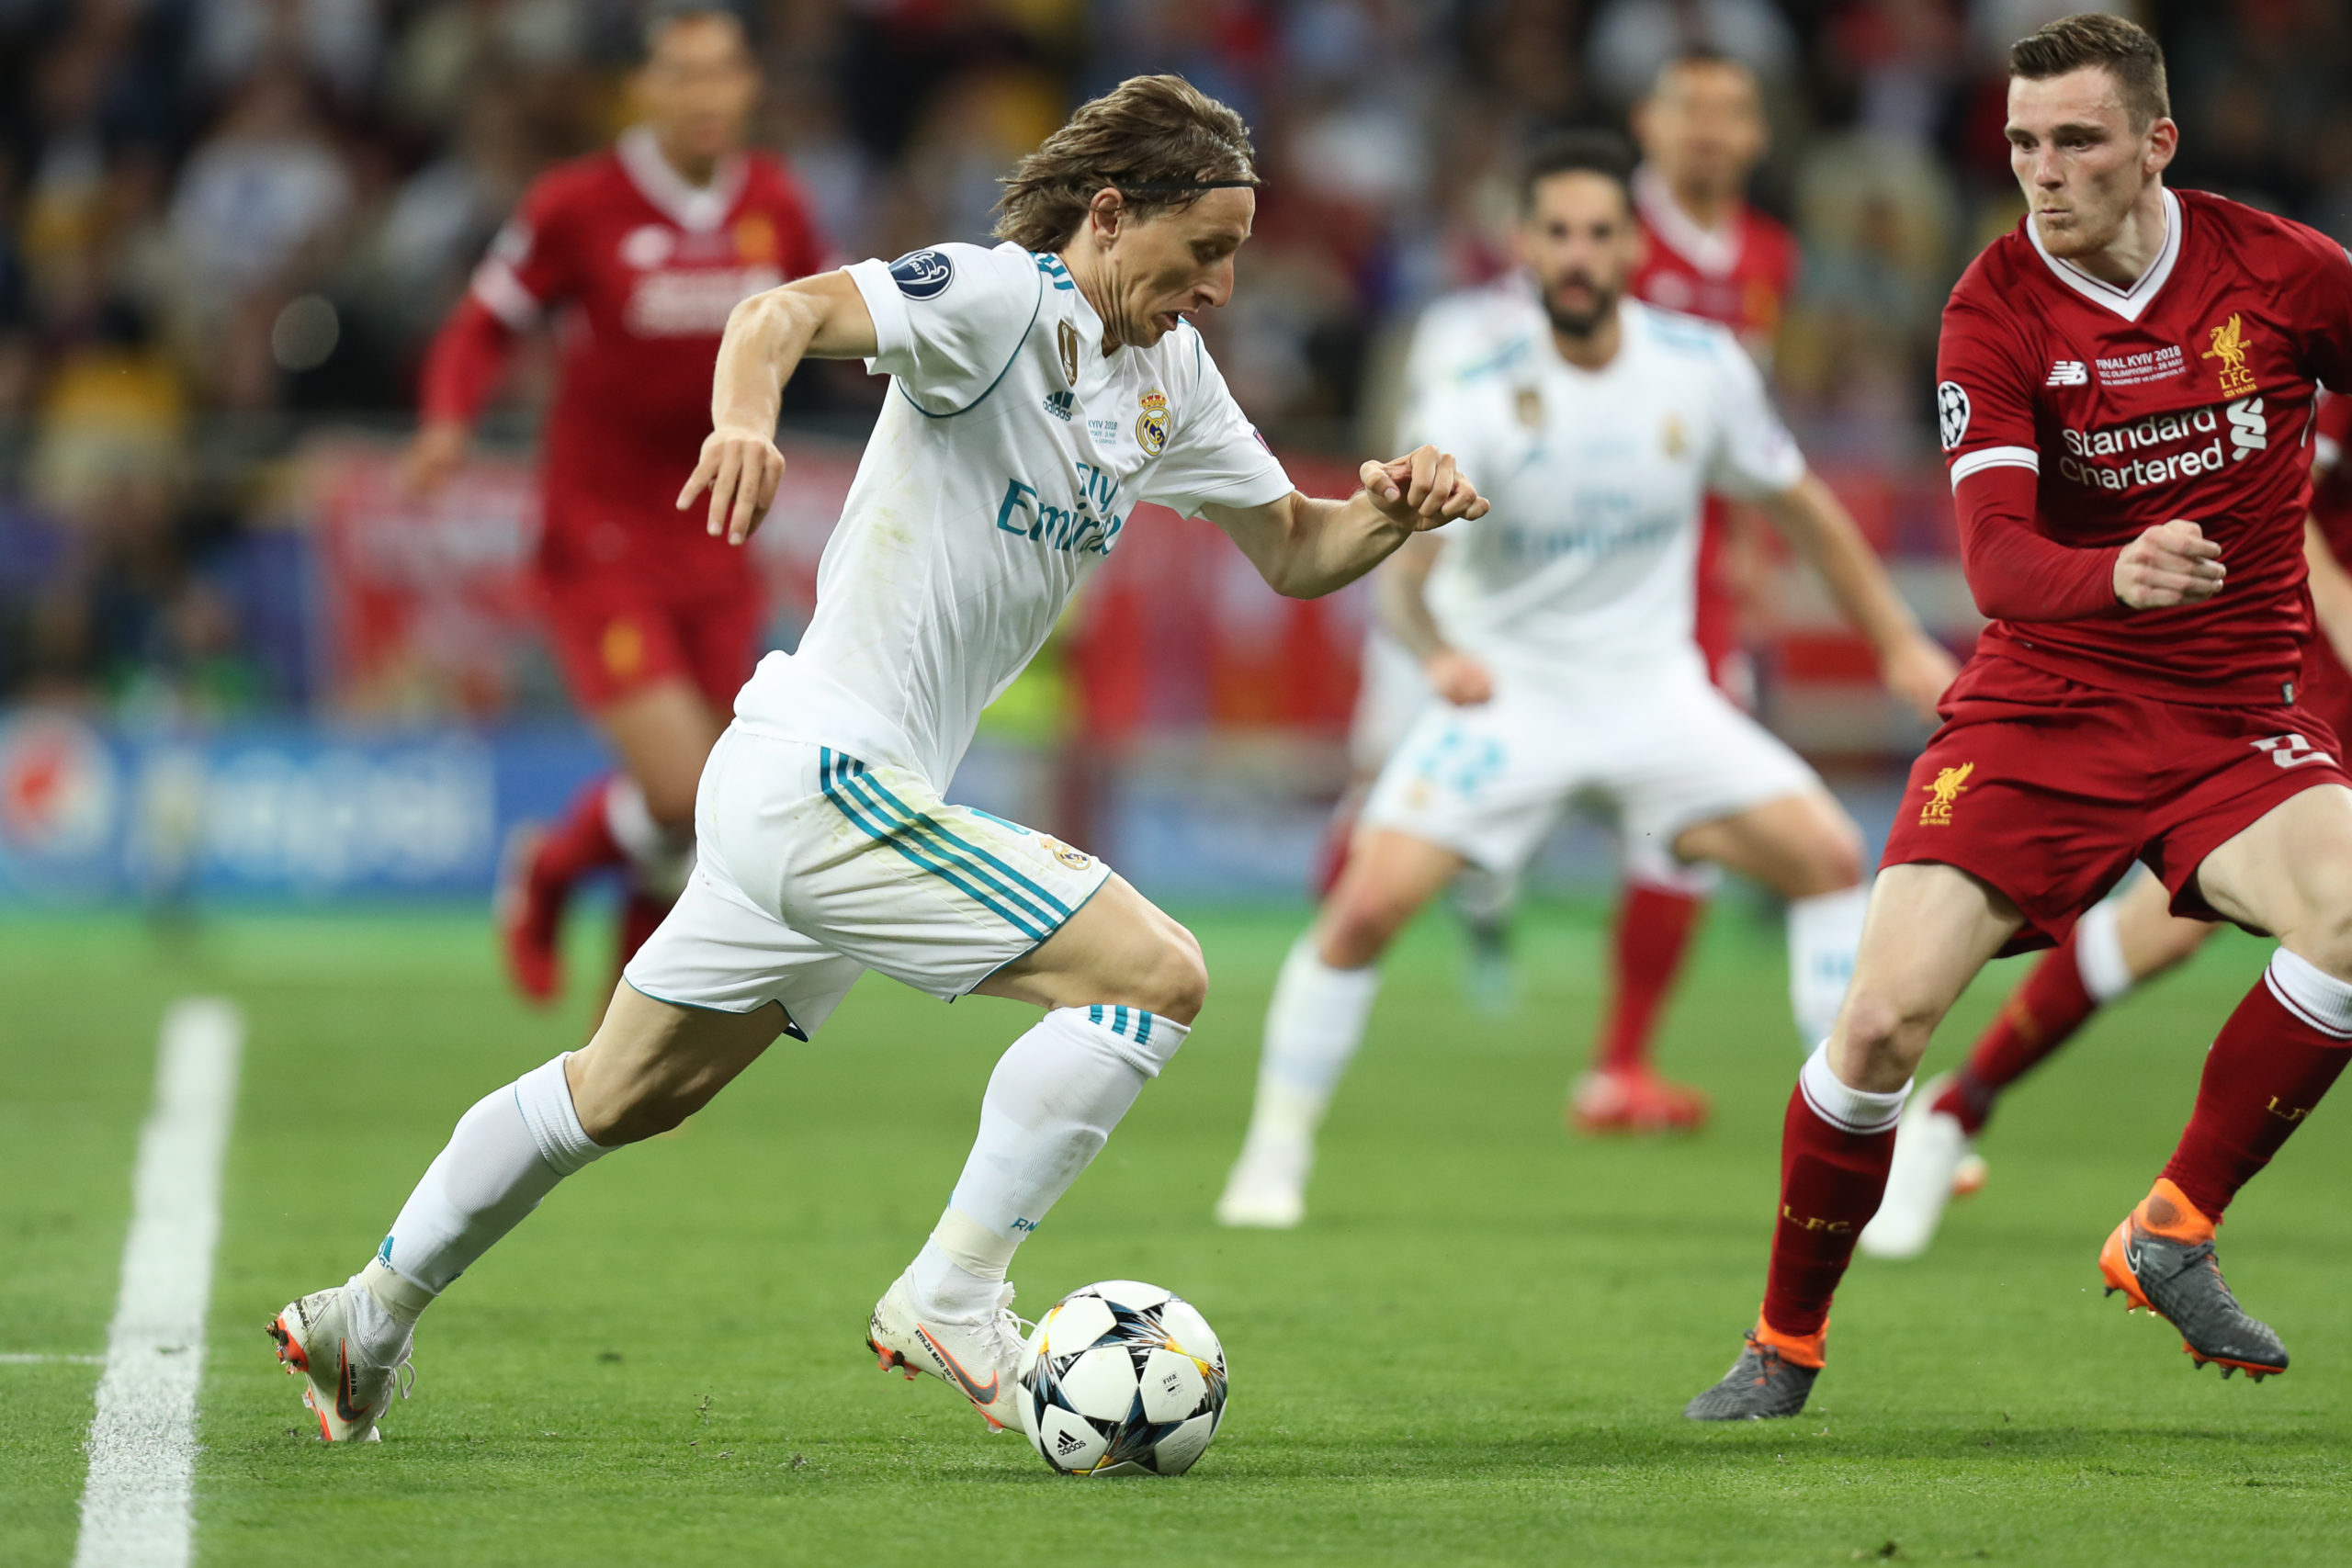 Luka Modric: 'Everyone wants to beat Real Madrid